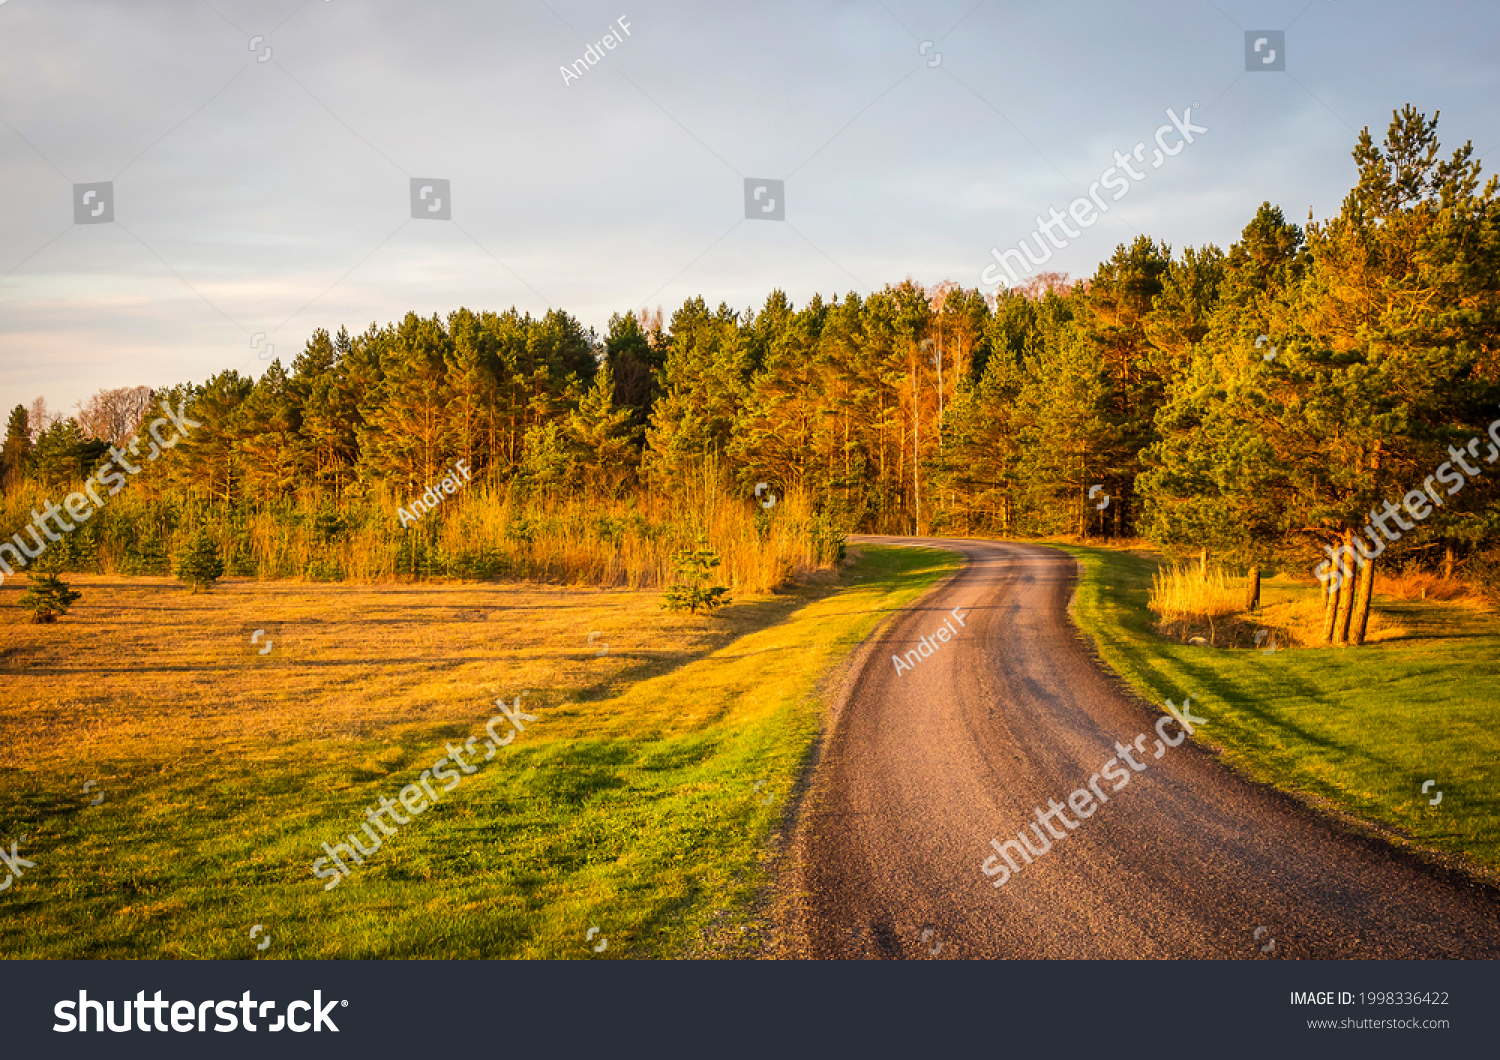 Rural road on an autumn day. Autumn road through a rural field landscape #1998336422